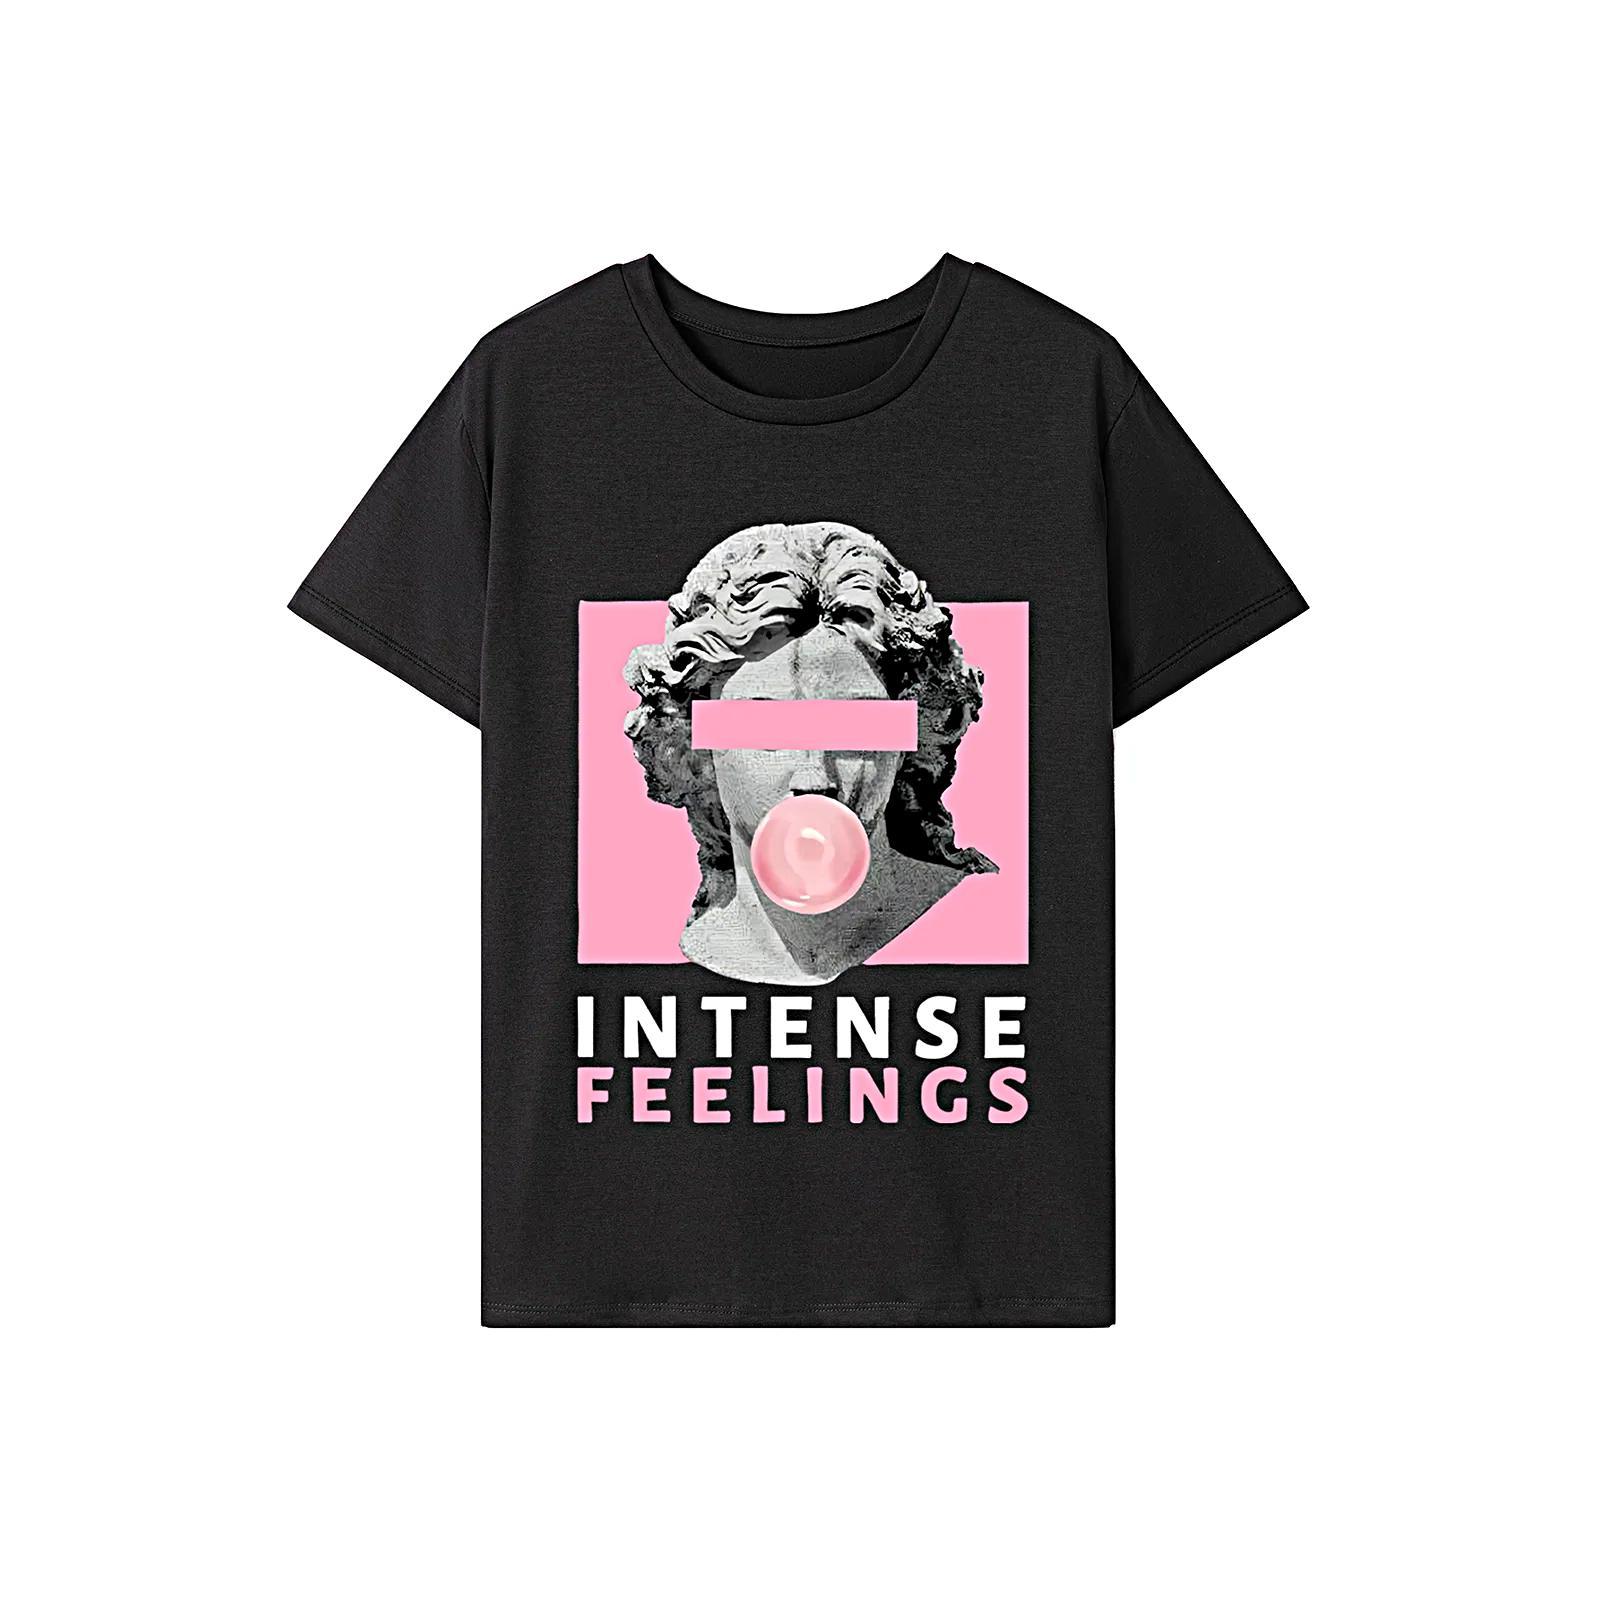 T Shirt for Women Summer Soft Trendy Summer Tops for Walking Sports Shopping S